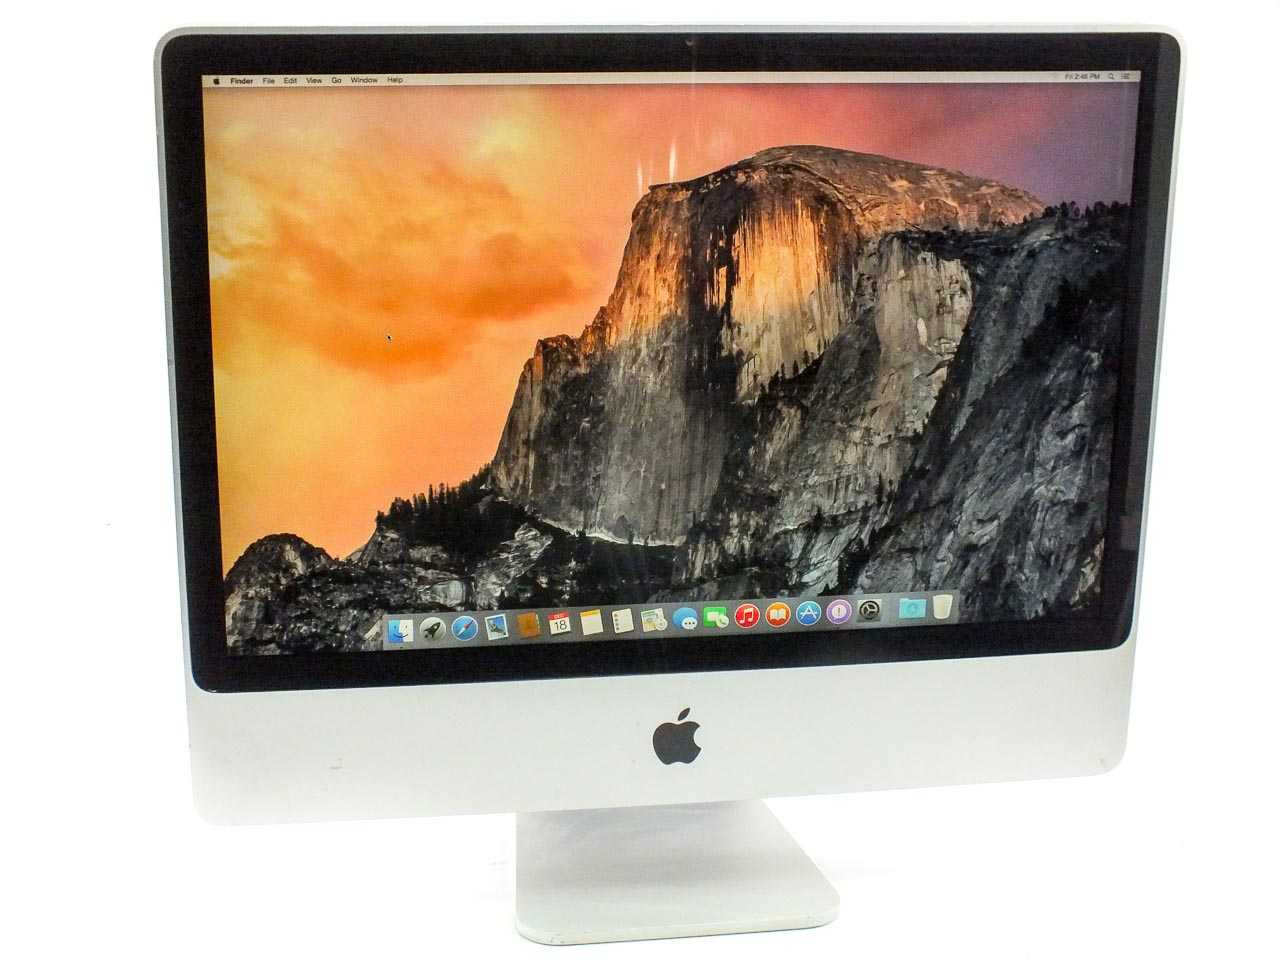 Apple A1225 24-inch iMac Core 2 Duo 2.4 GHz 2 GB RAM 320 GB HDD